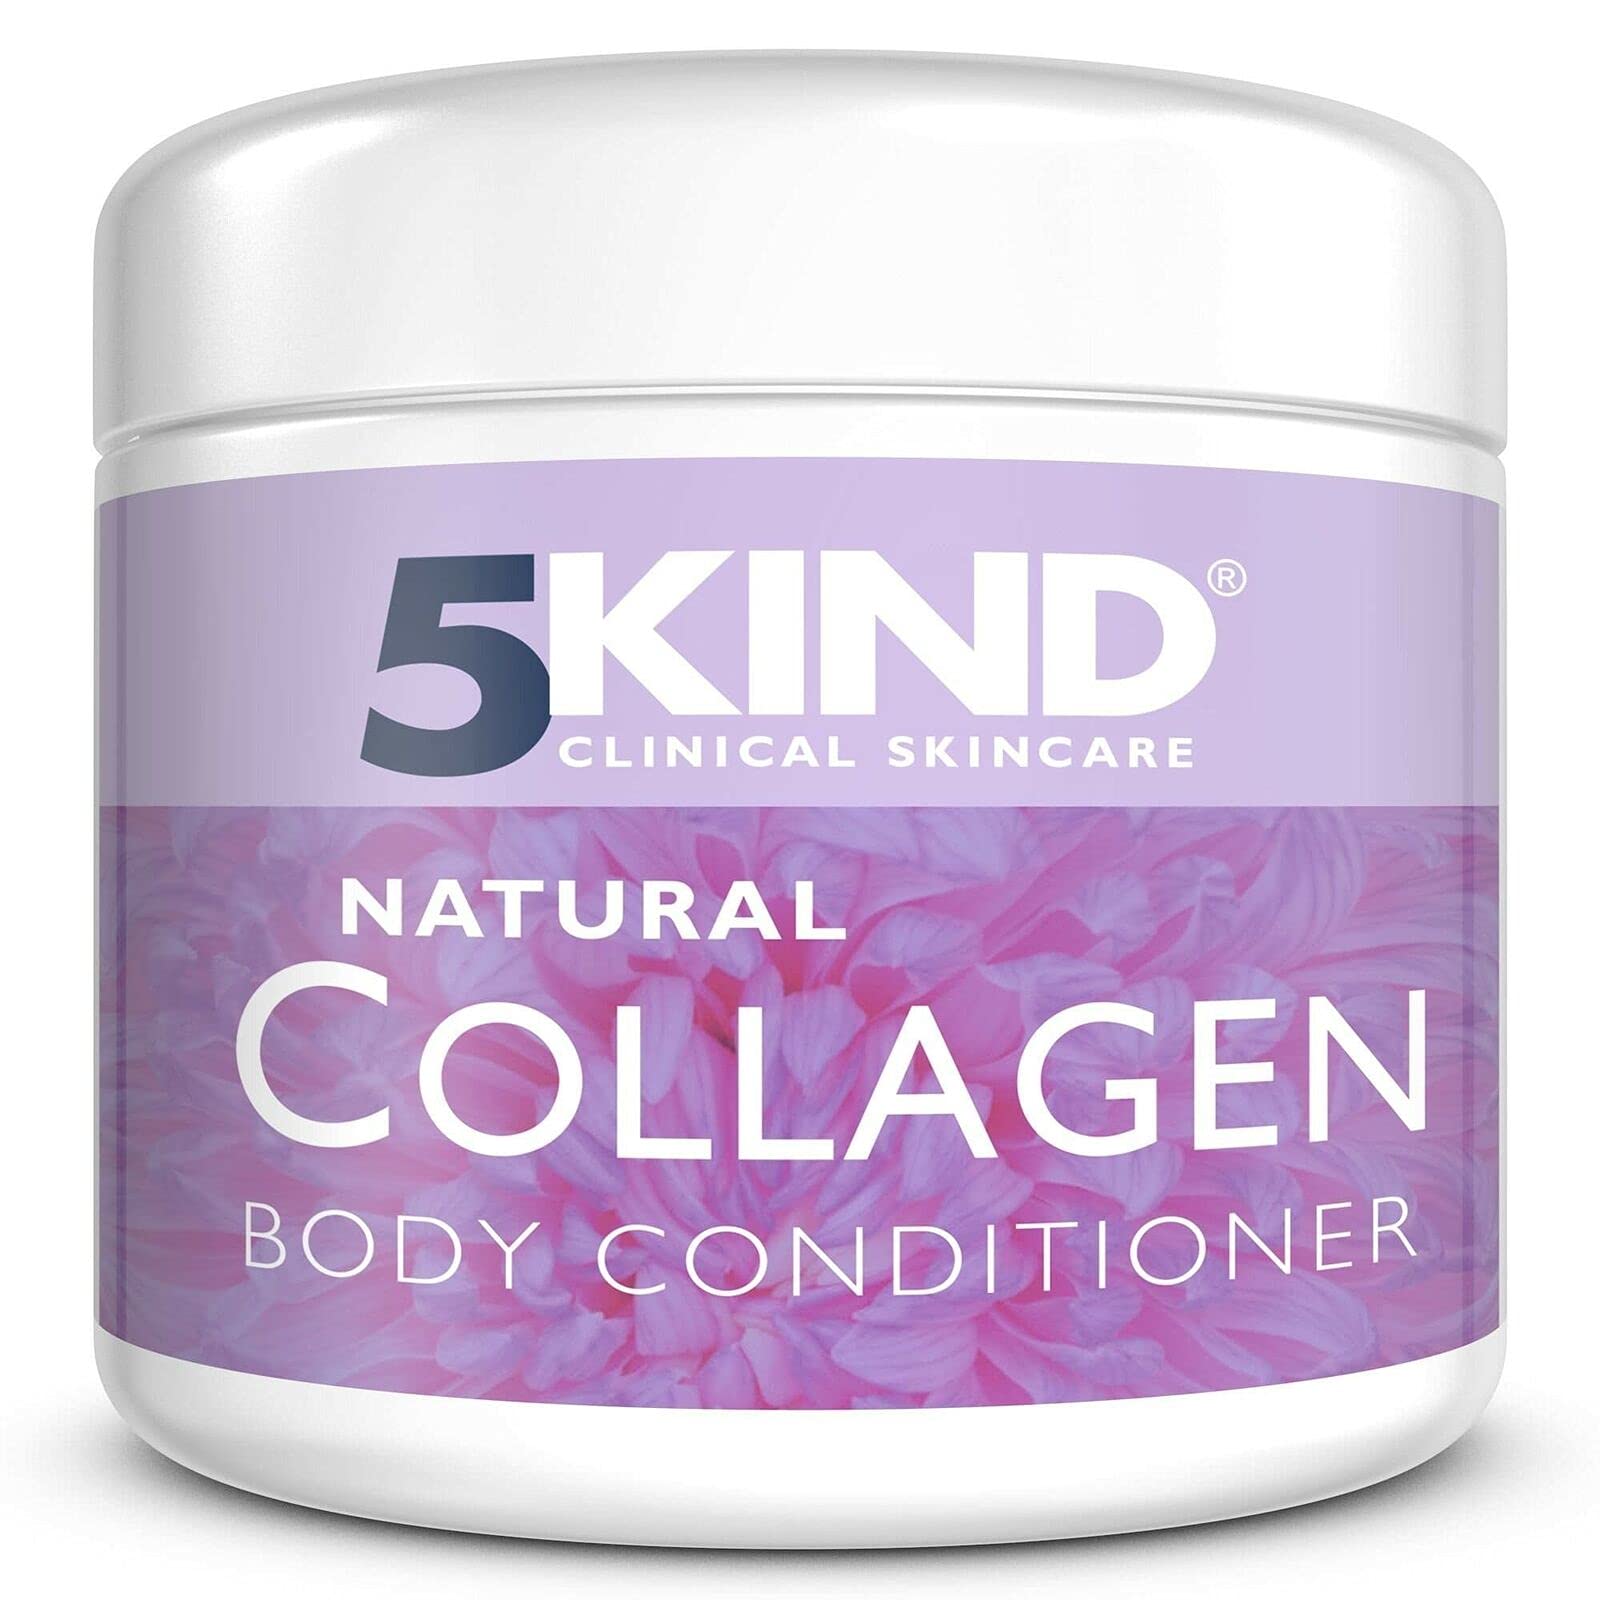 Collagen Cocoa Butter Body Conditioner Cream by 5kind-body cream moisturiser women and mens-rich firming cream